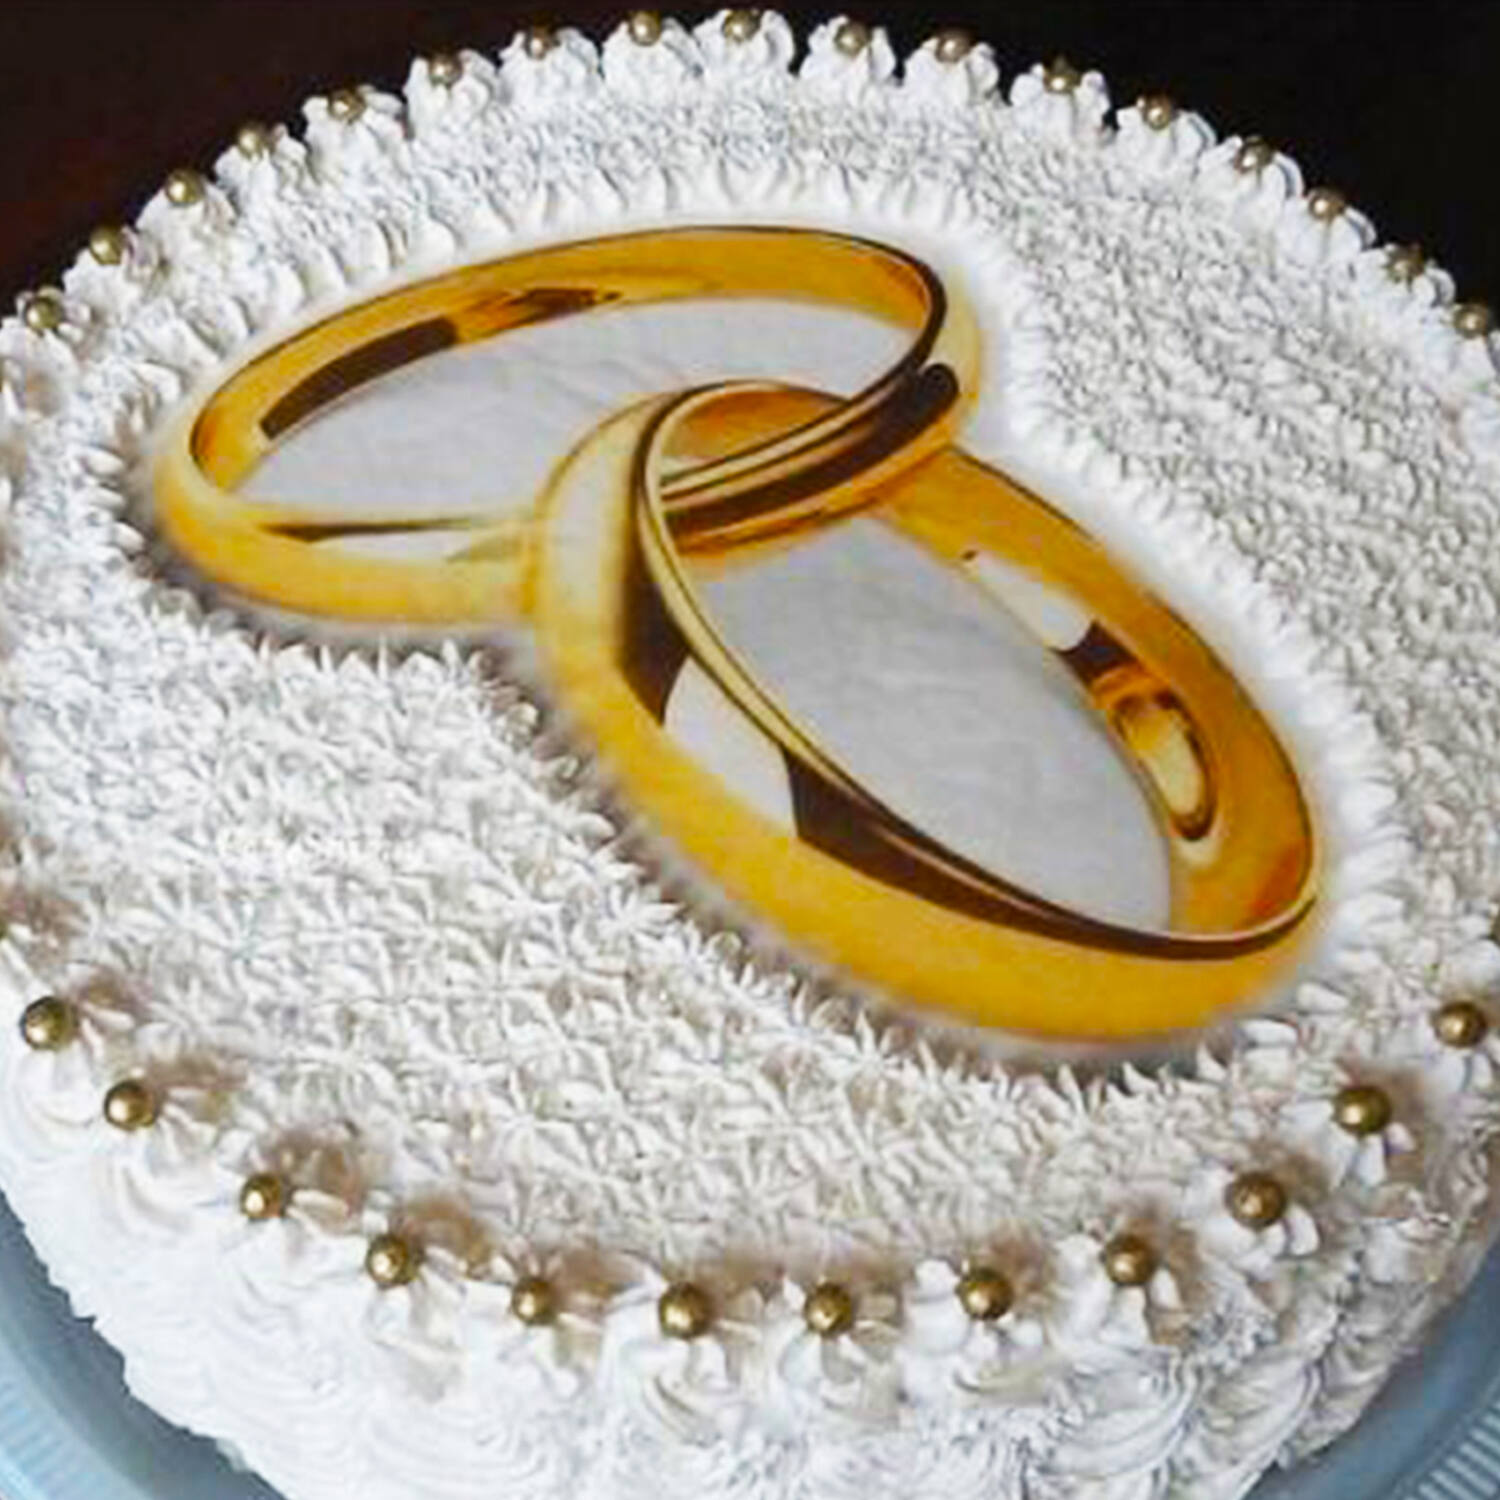 Order Engagement Cake Online at Best Price & Designs